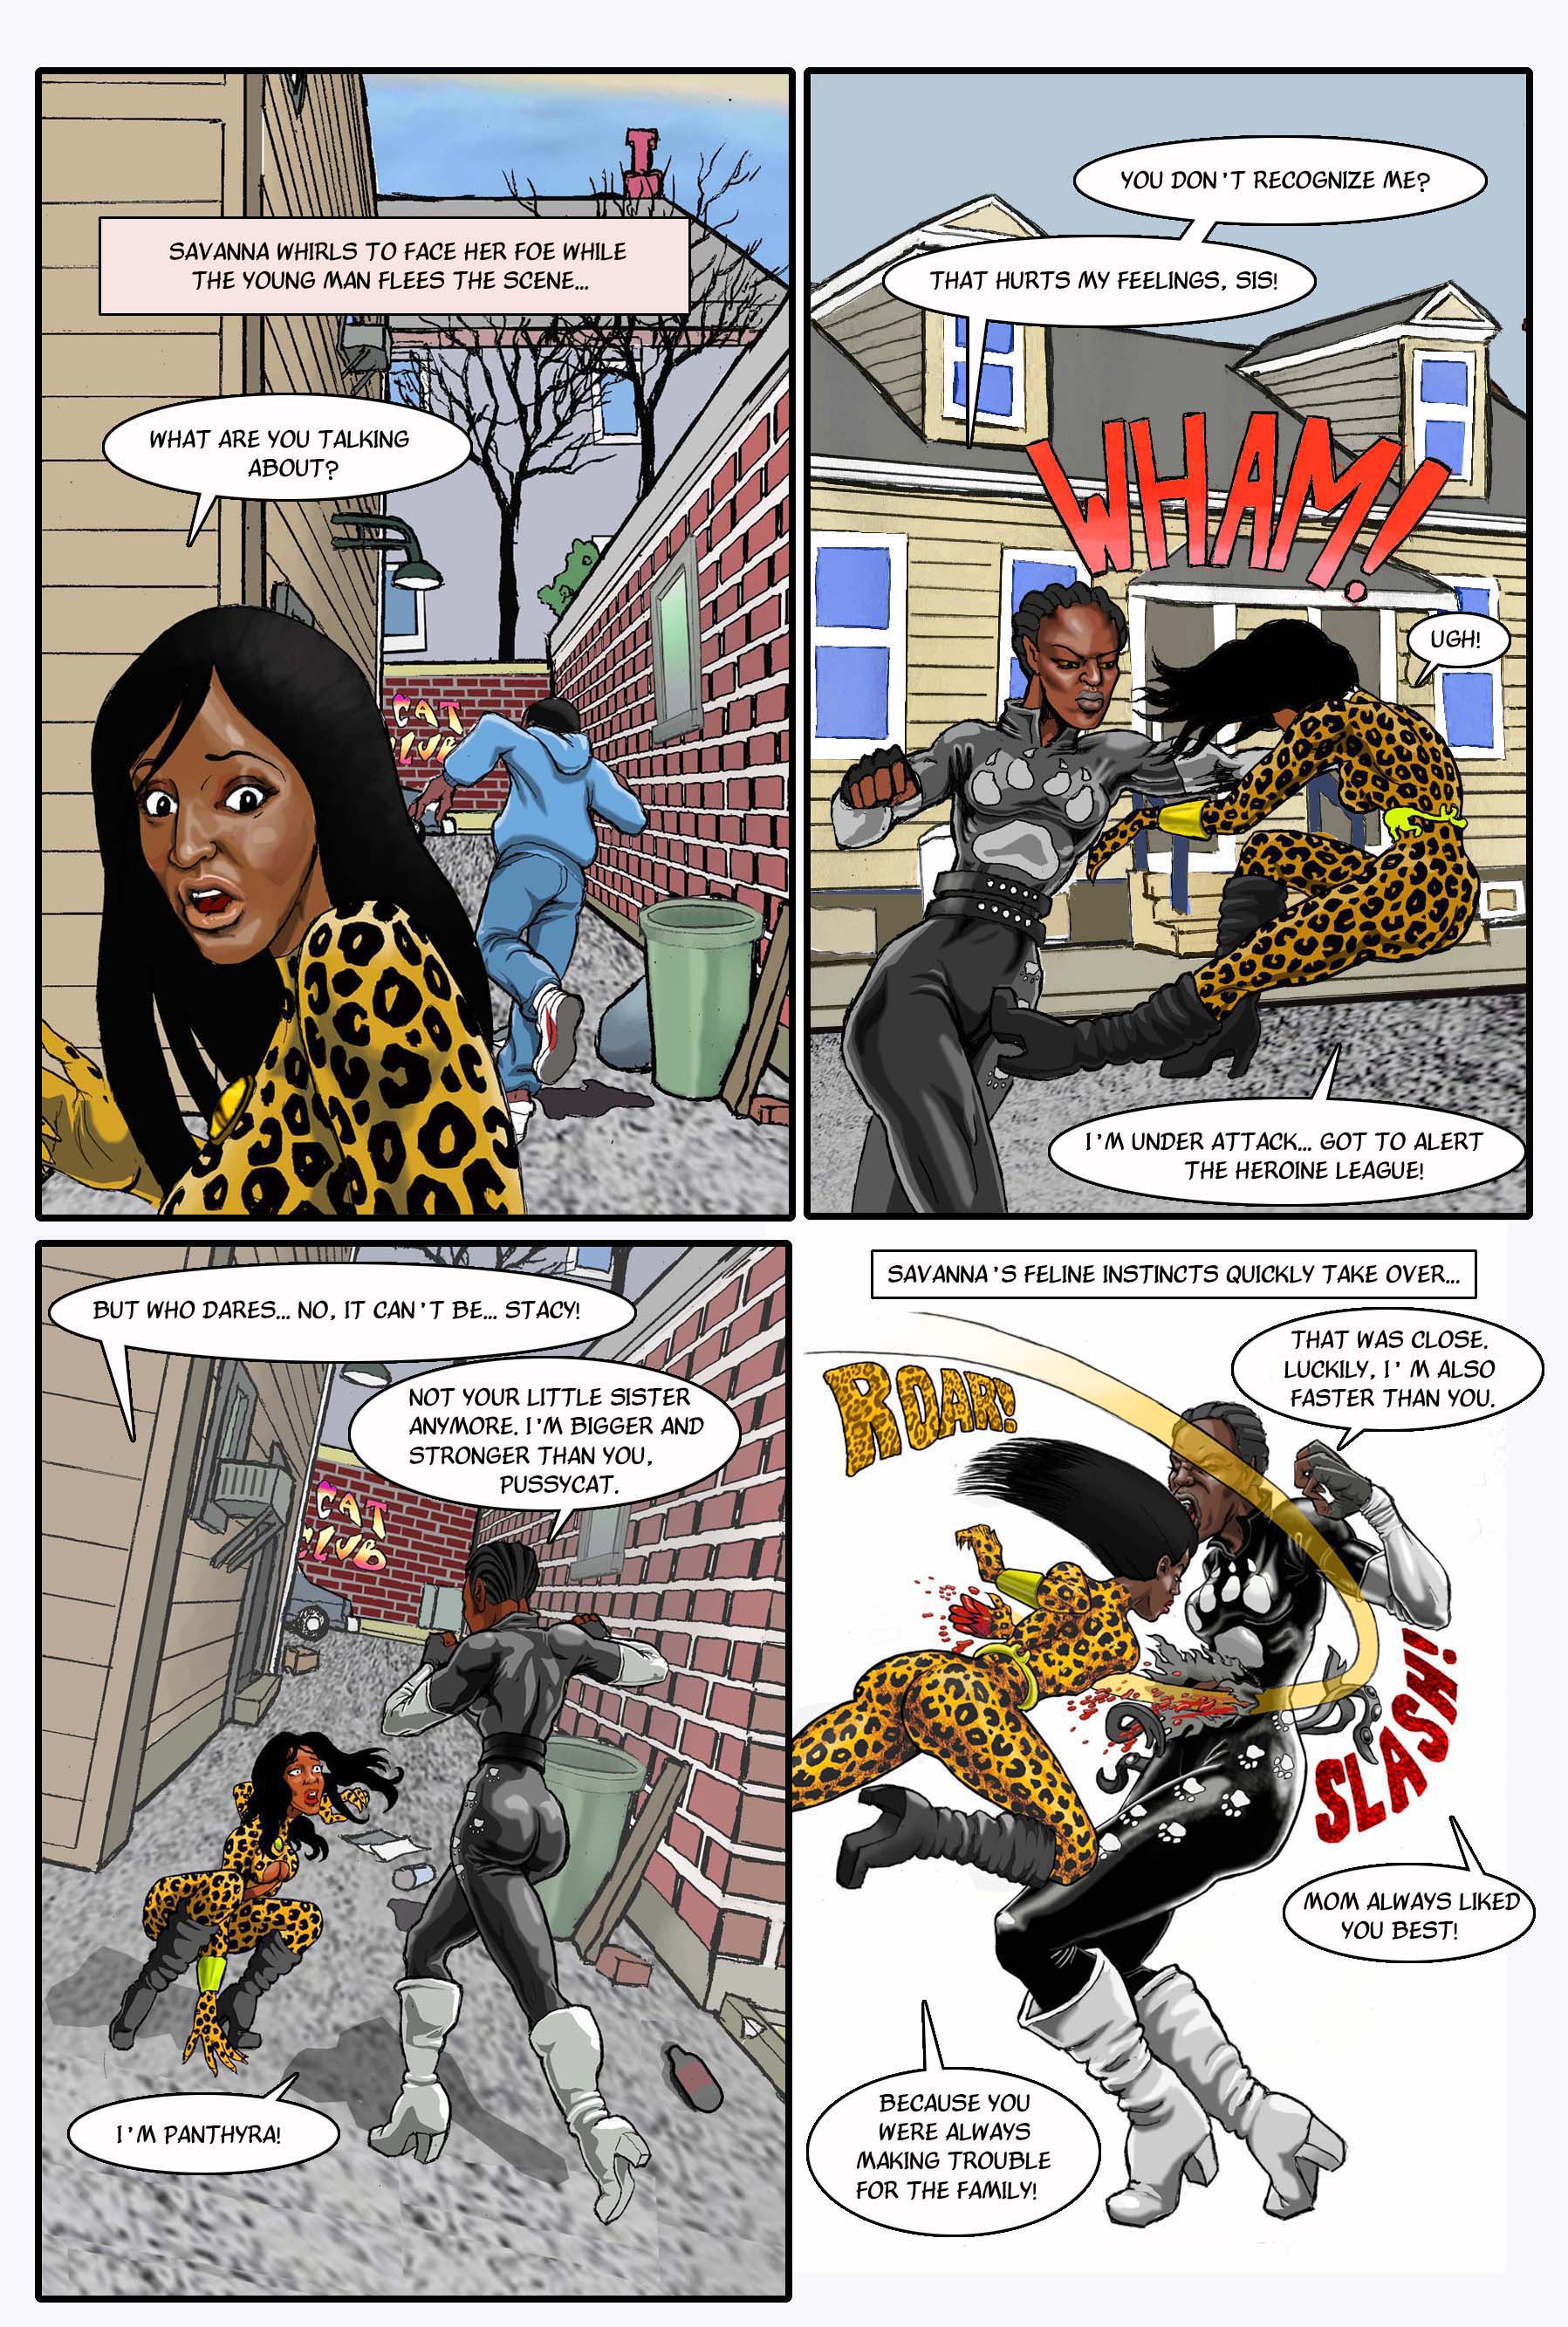 Heroineburgh Comics #2 page 9.jpg